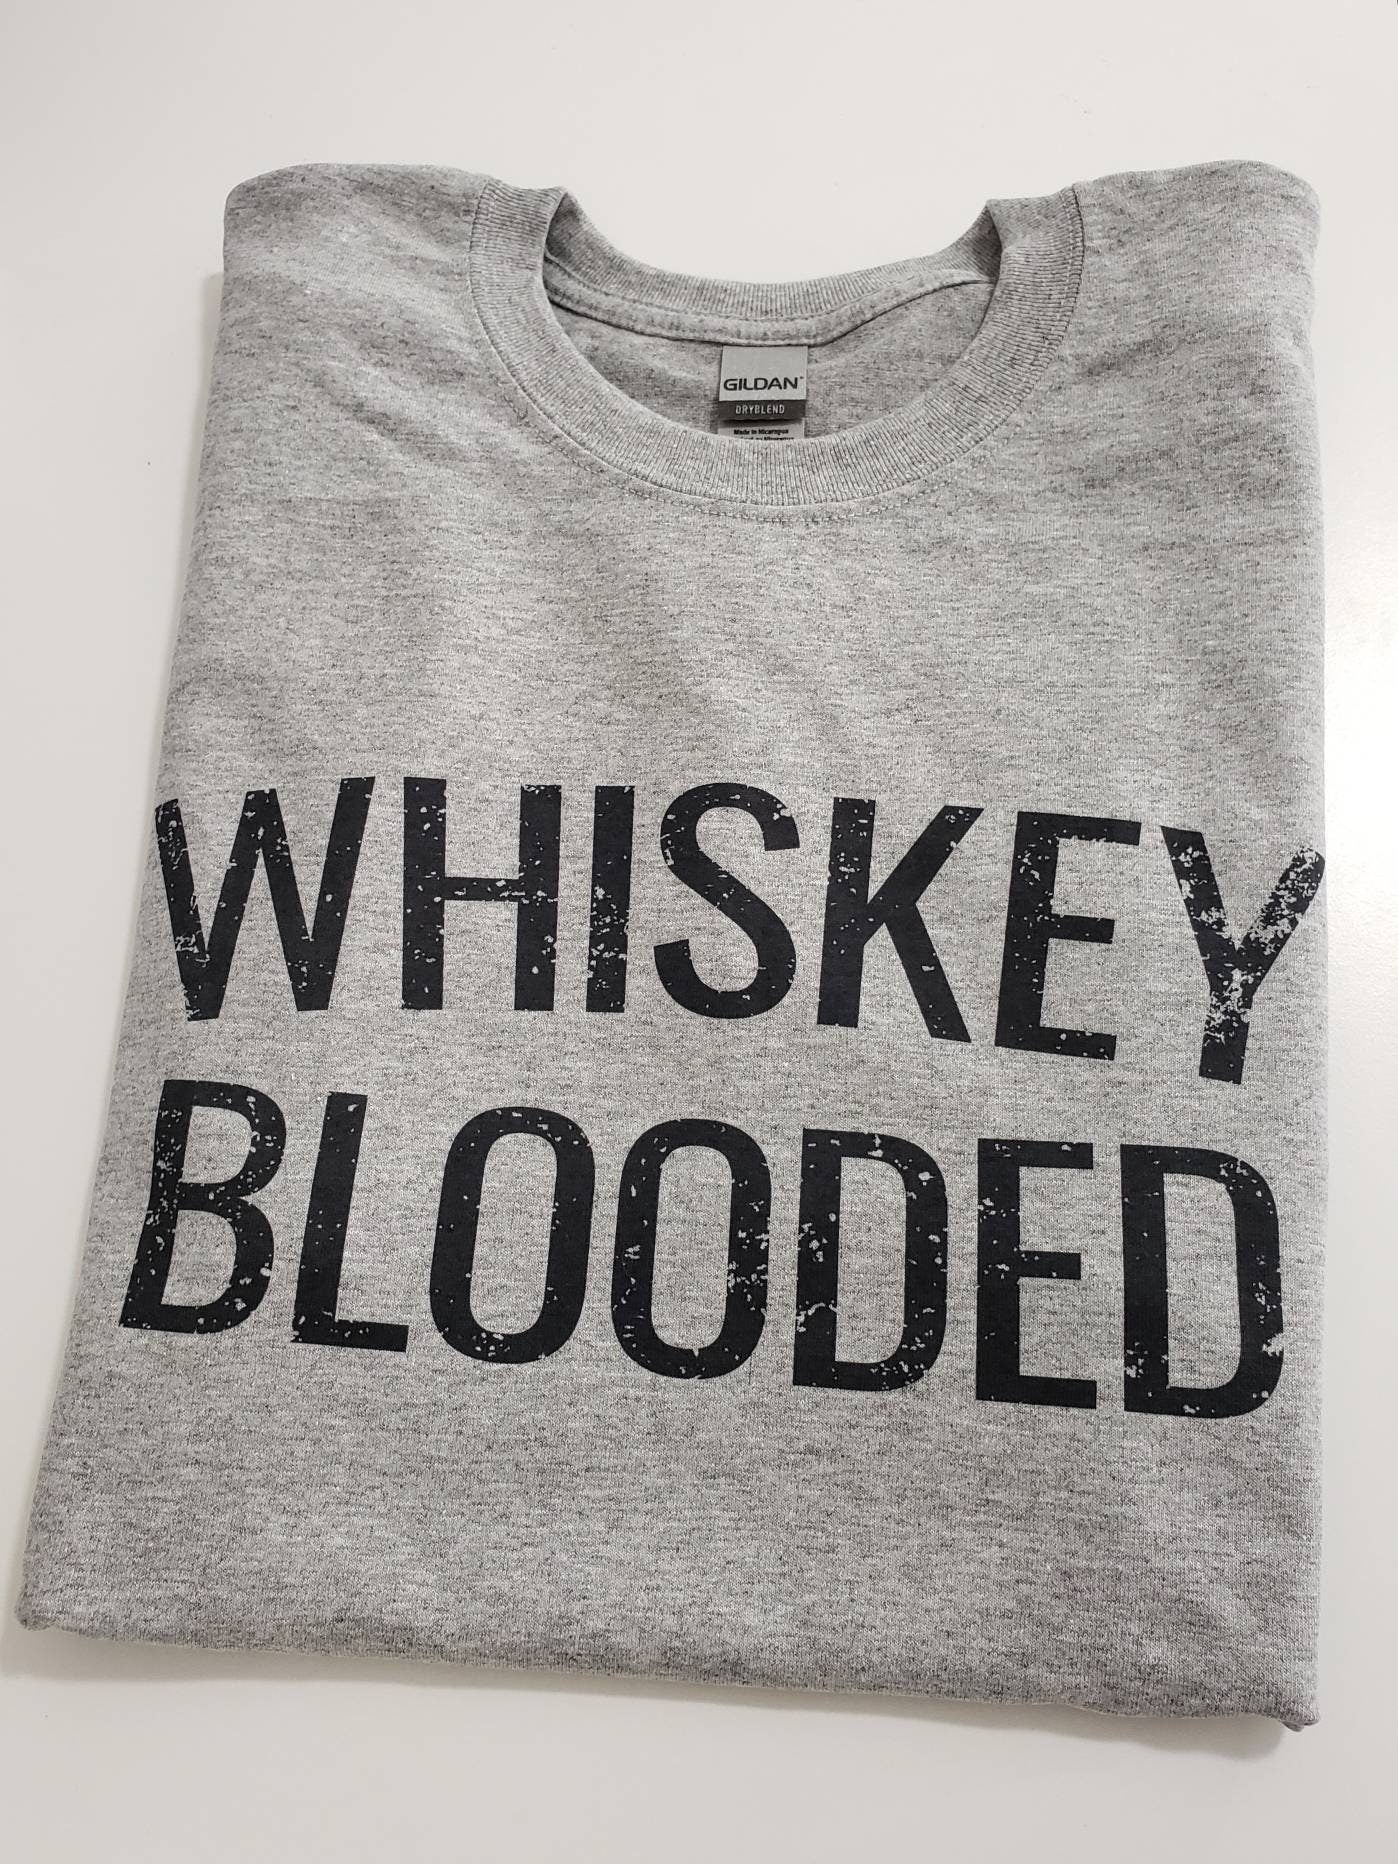 Whiskey Blooded Grunge Vintage Print Grey T-shirt